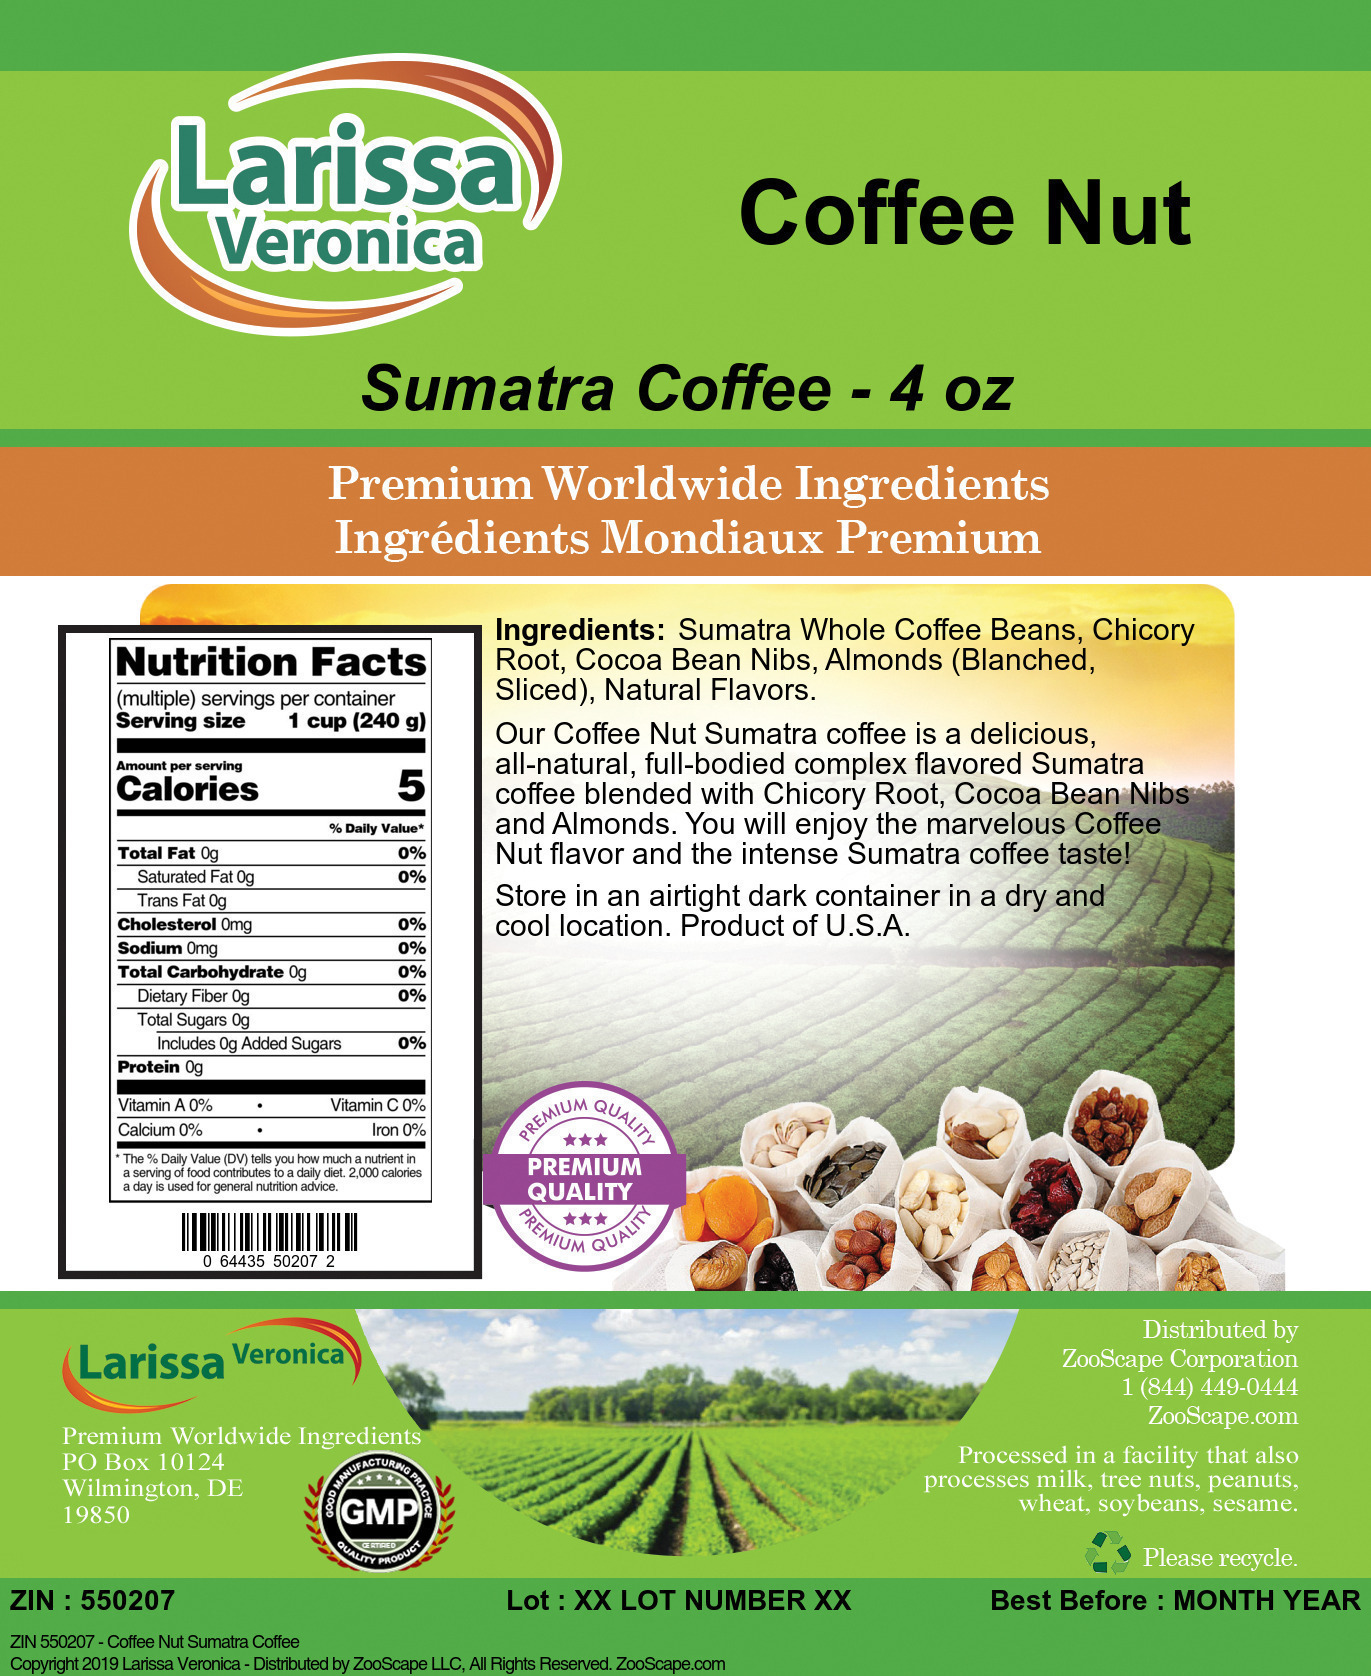 Coffee Nut Sumatra Coffee - Label